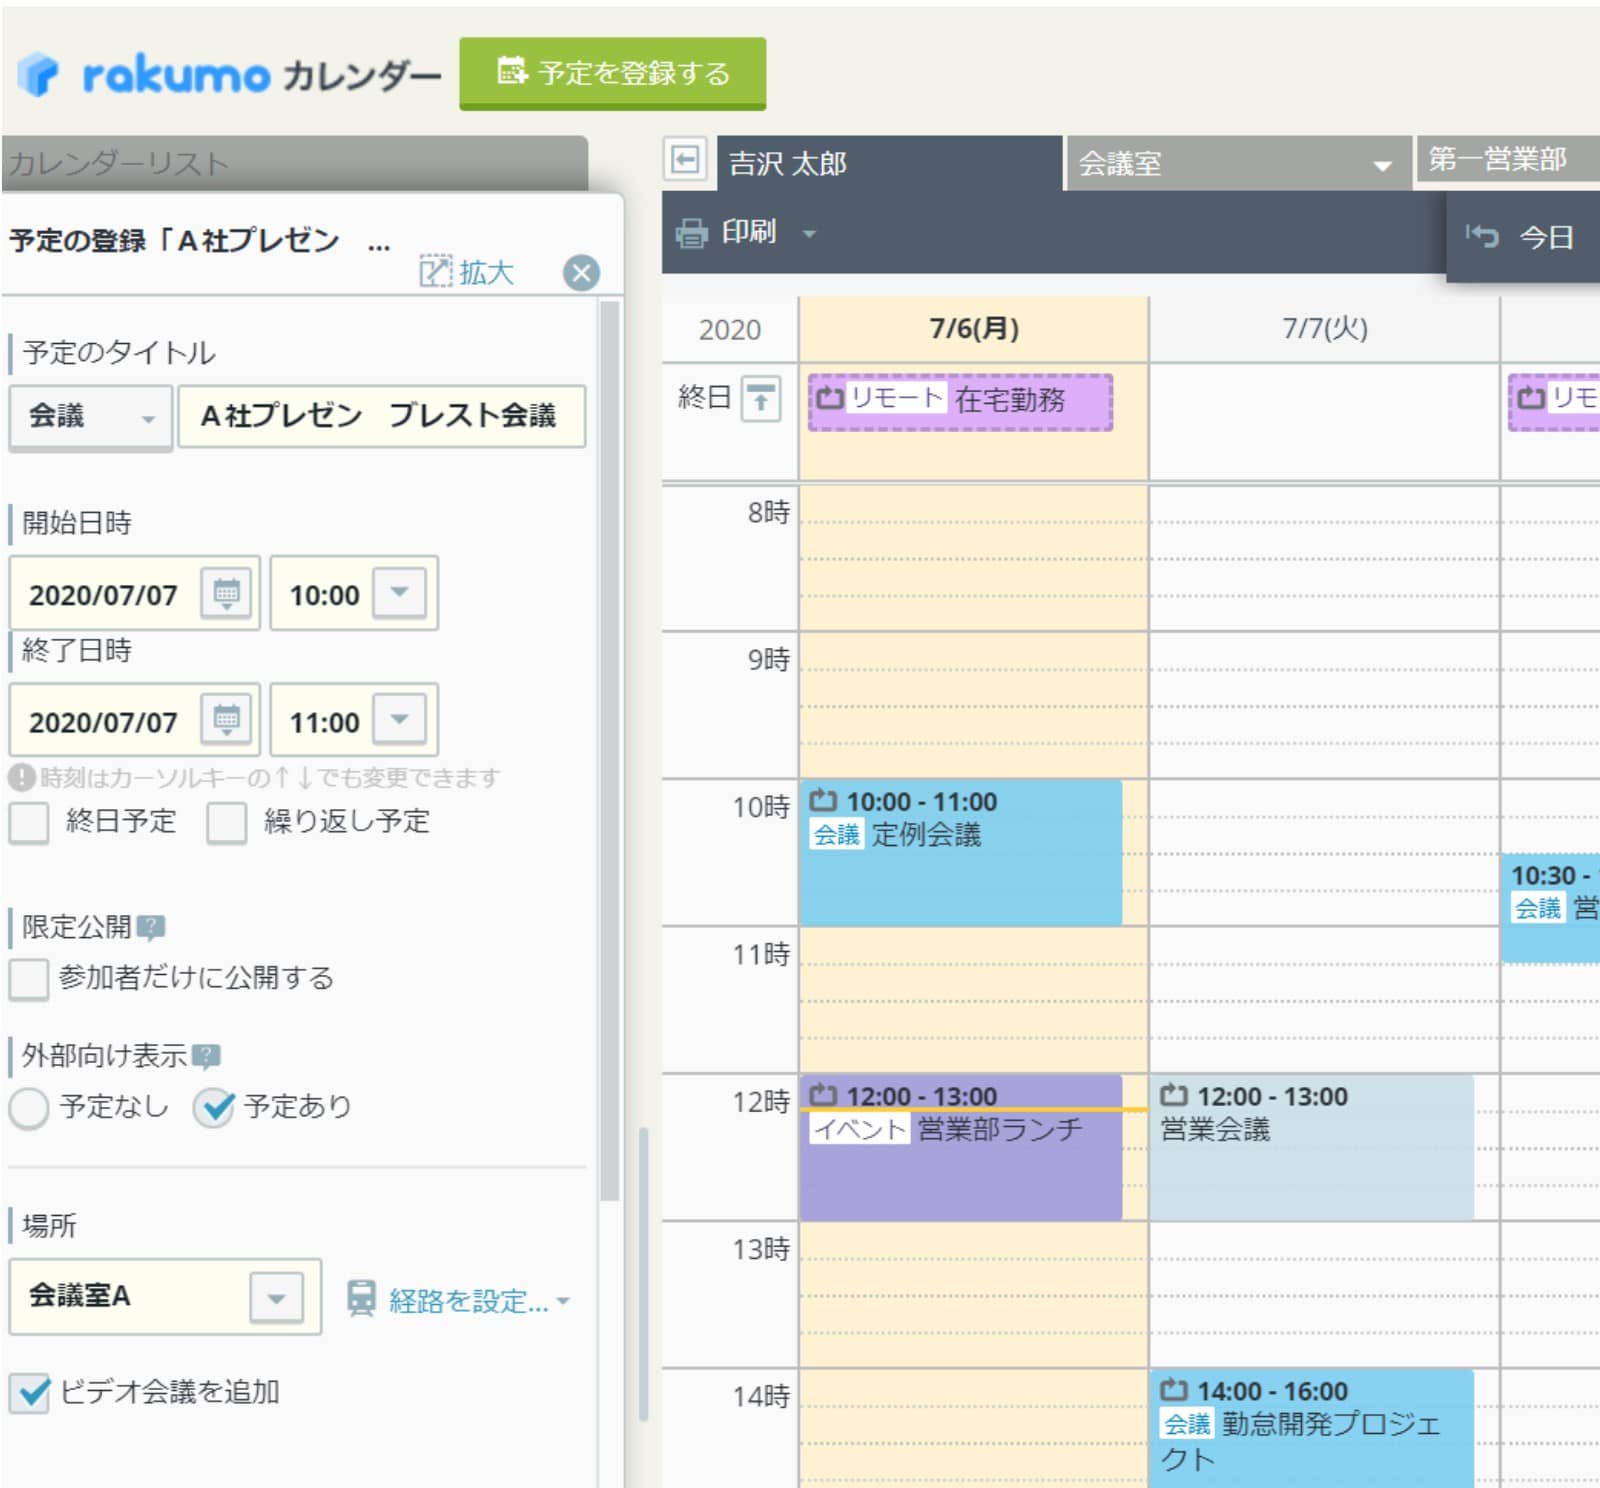 rakumo カレンダー 「たたむ」の状態で予定を確認しながら登録